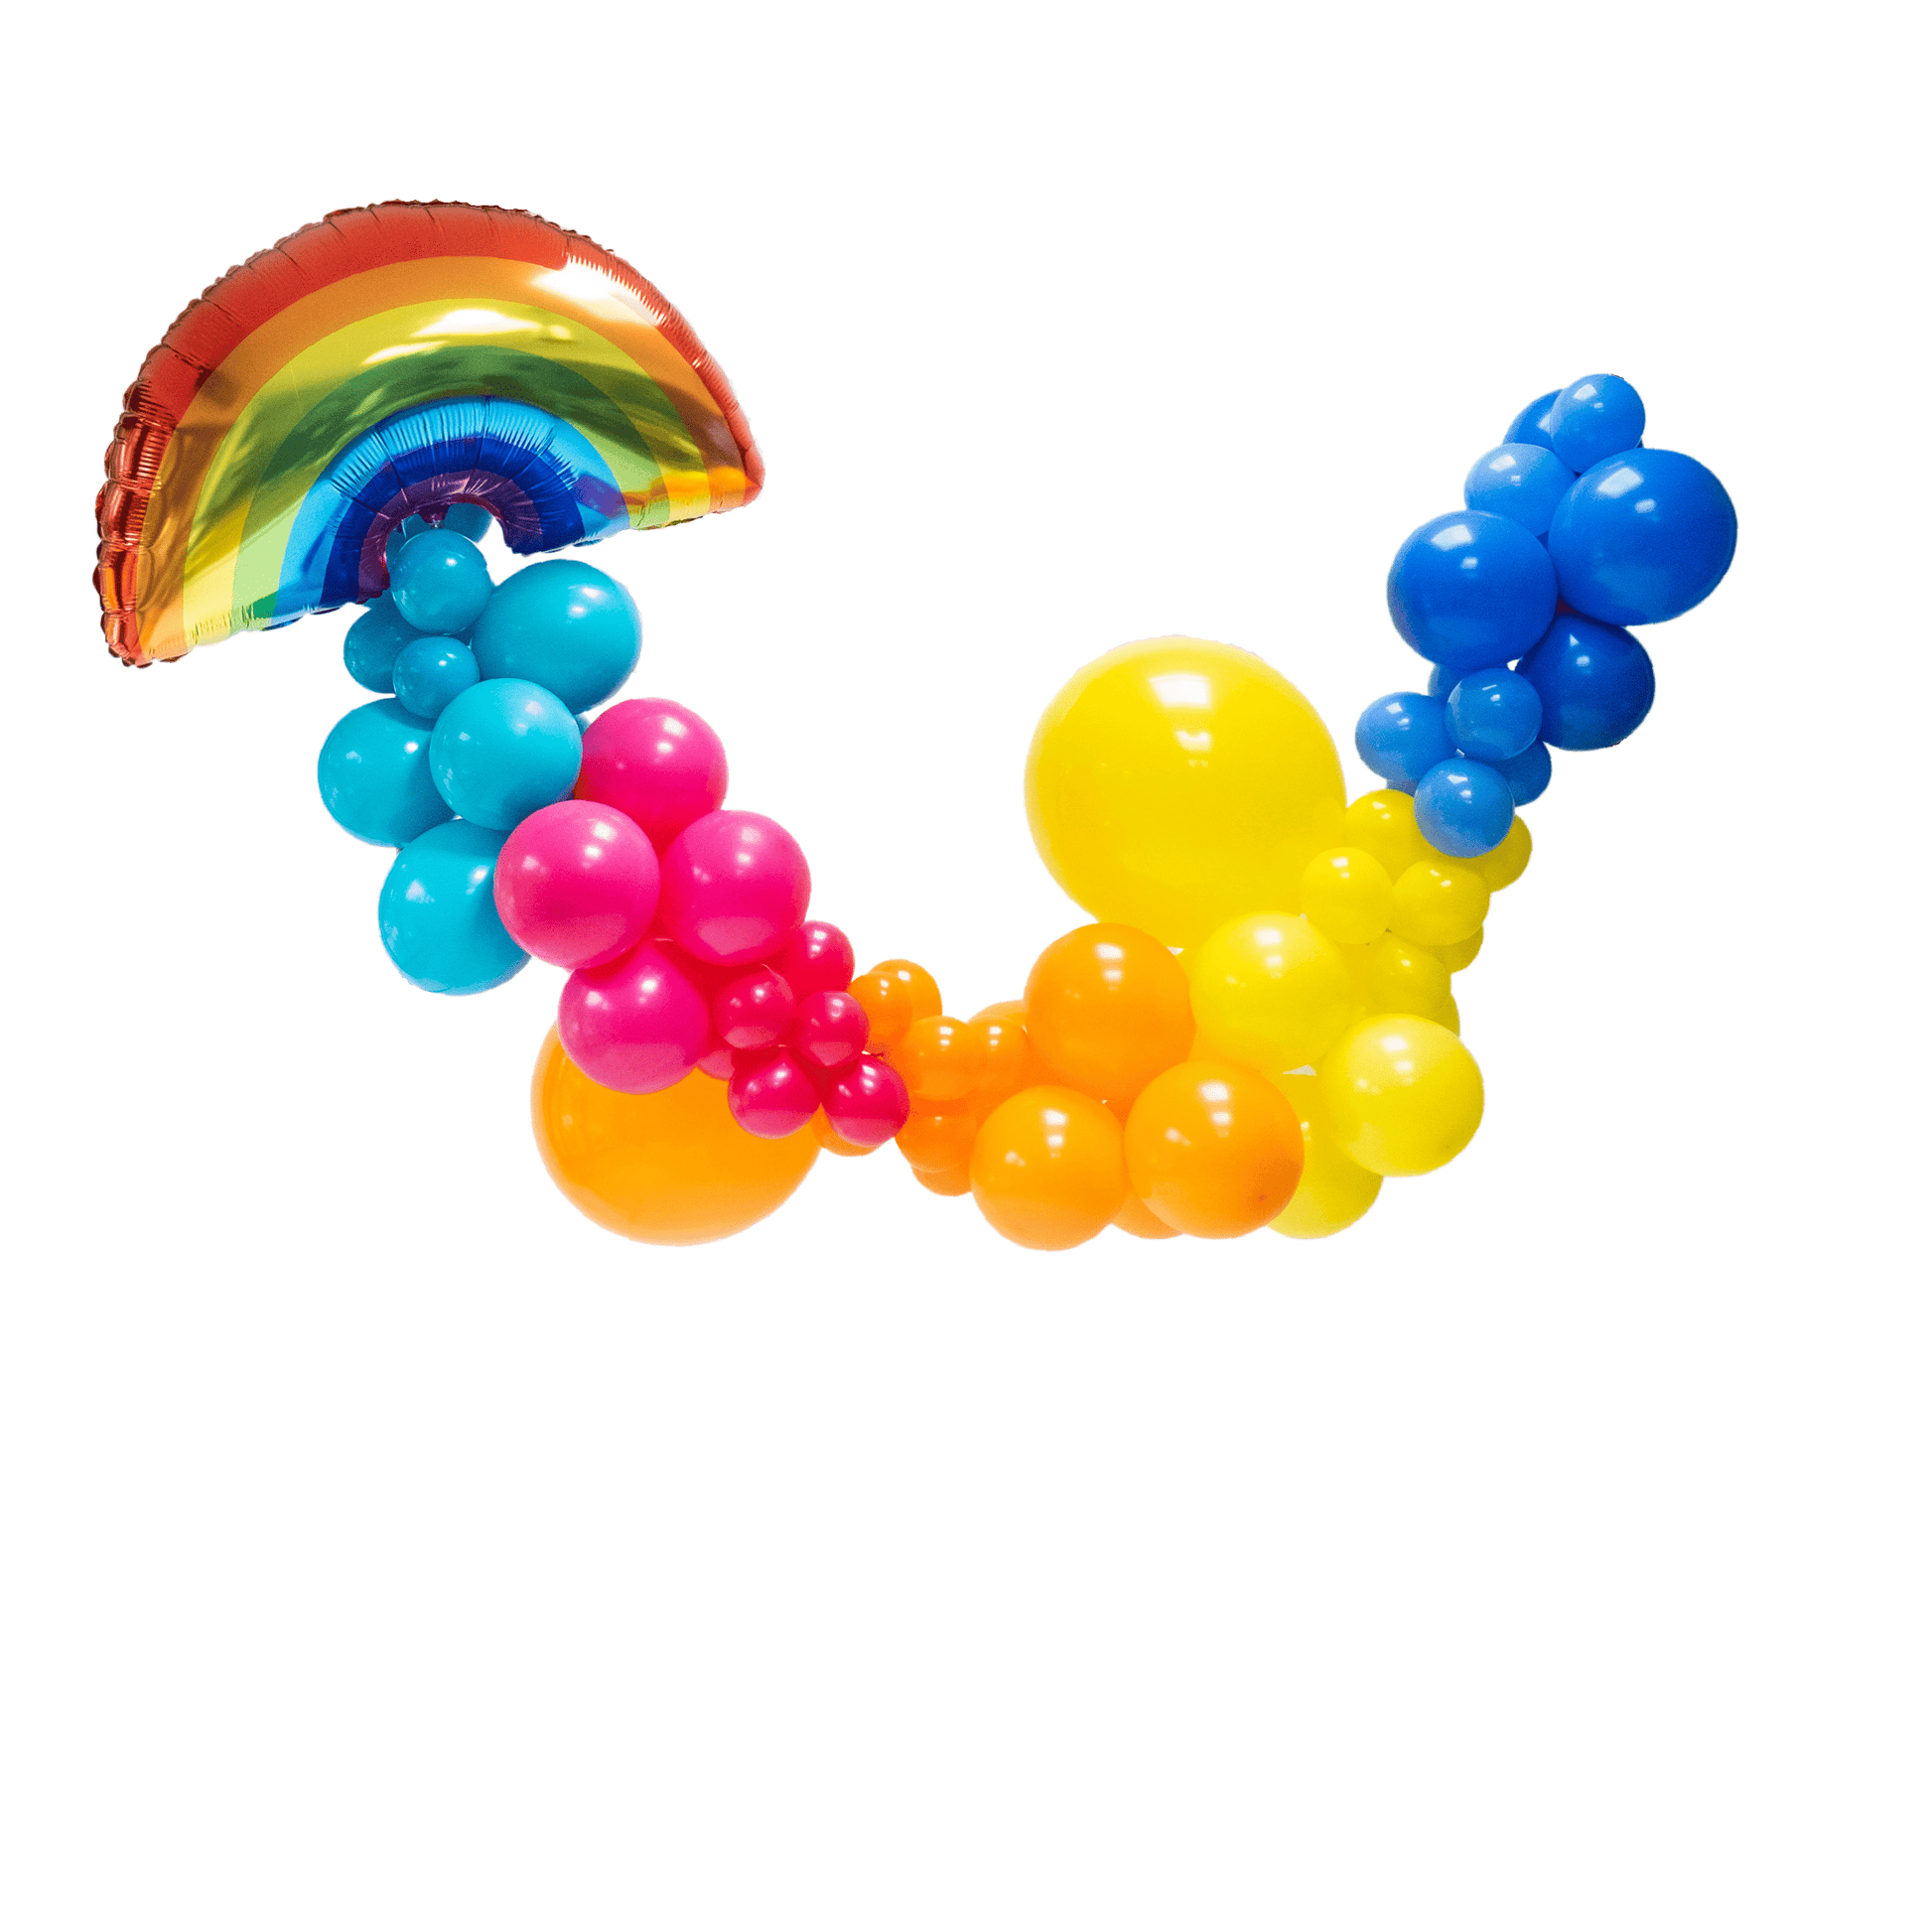 Balloon Garland Kit | Rainbow Balloon Arch Garland UK PLPS Designed